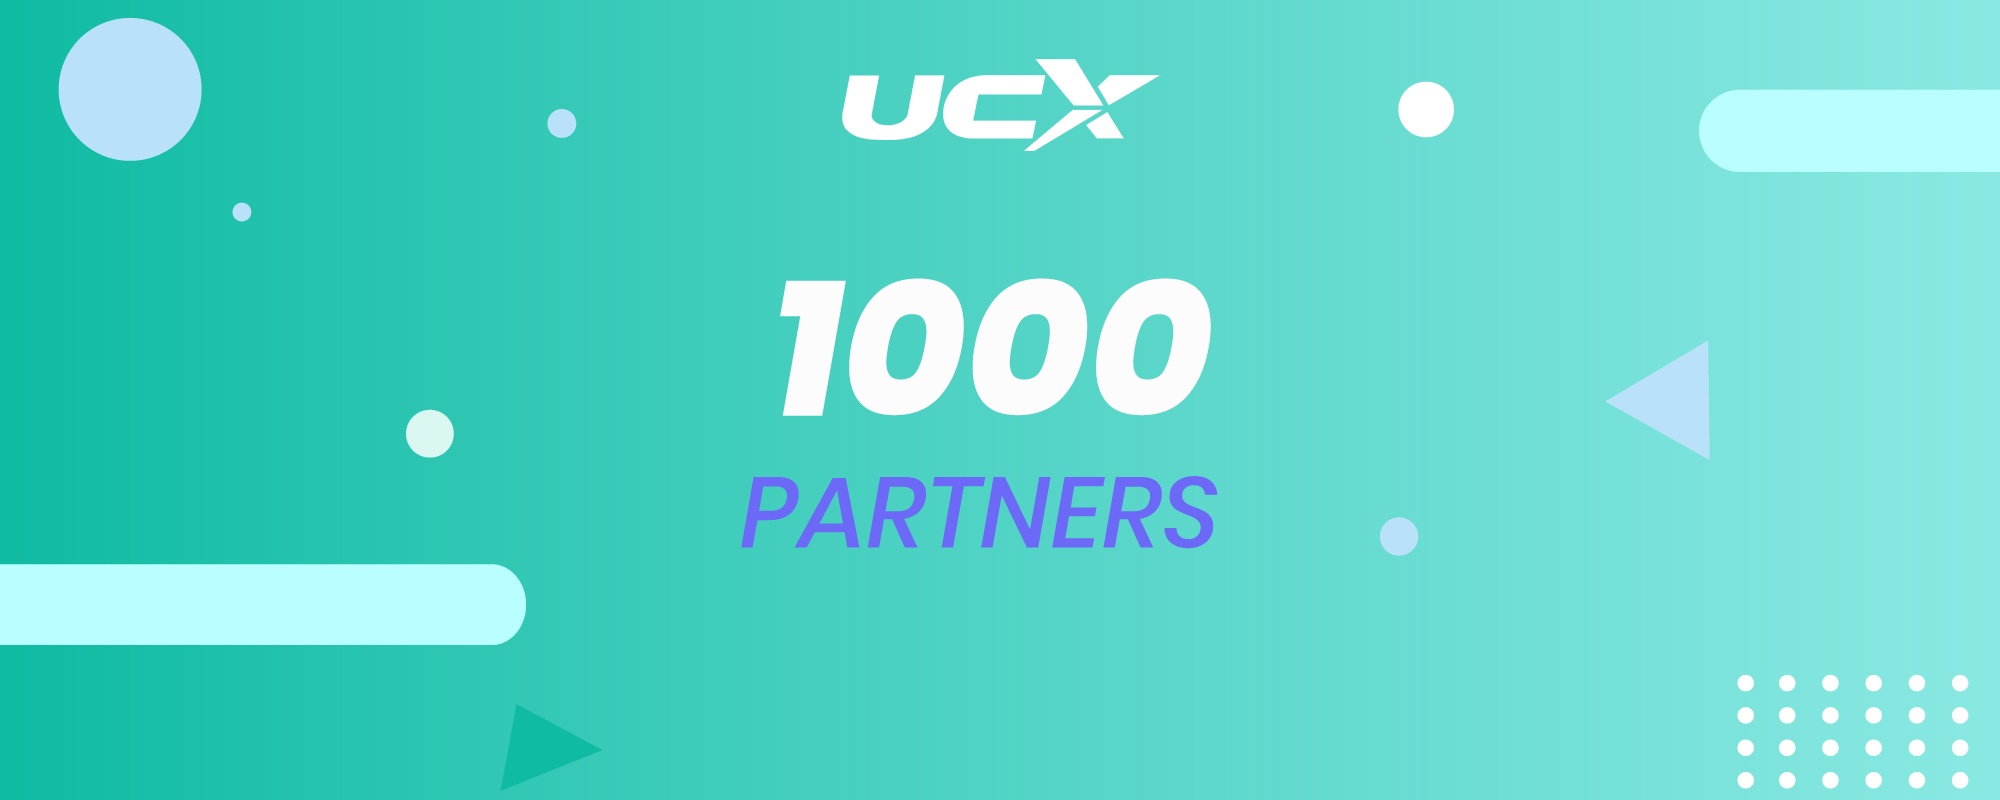 1000 partners at UCXmarket